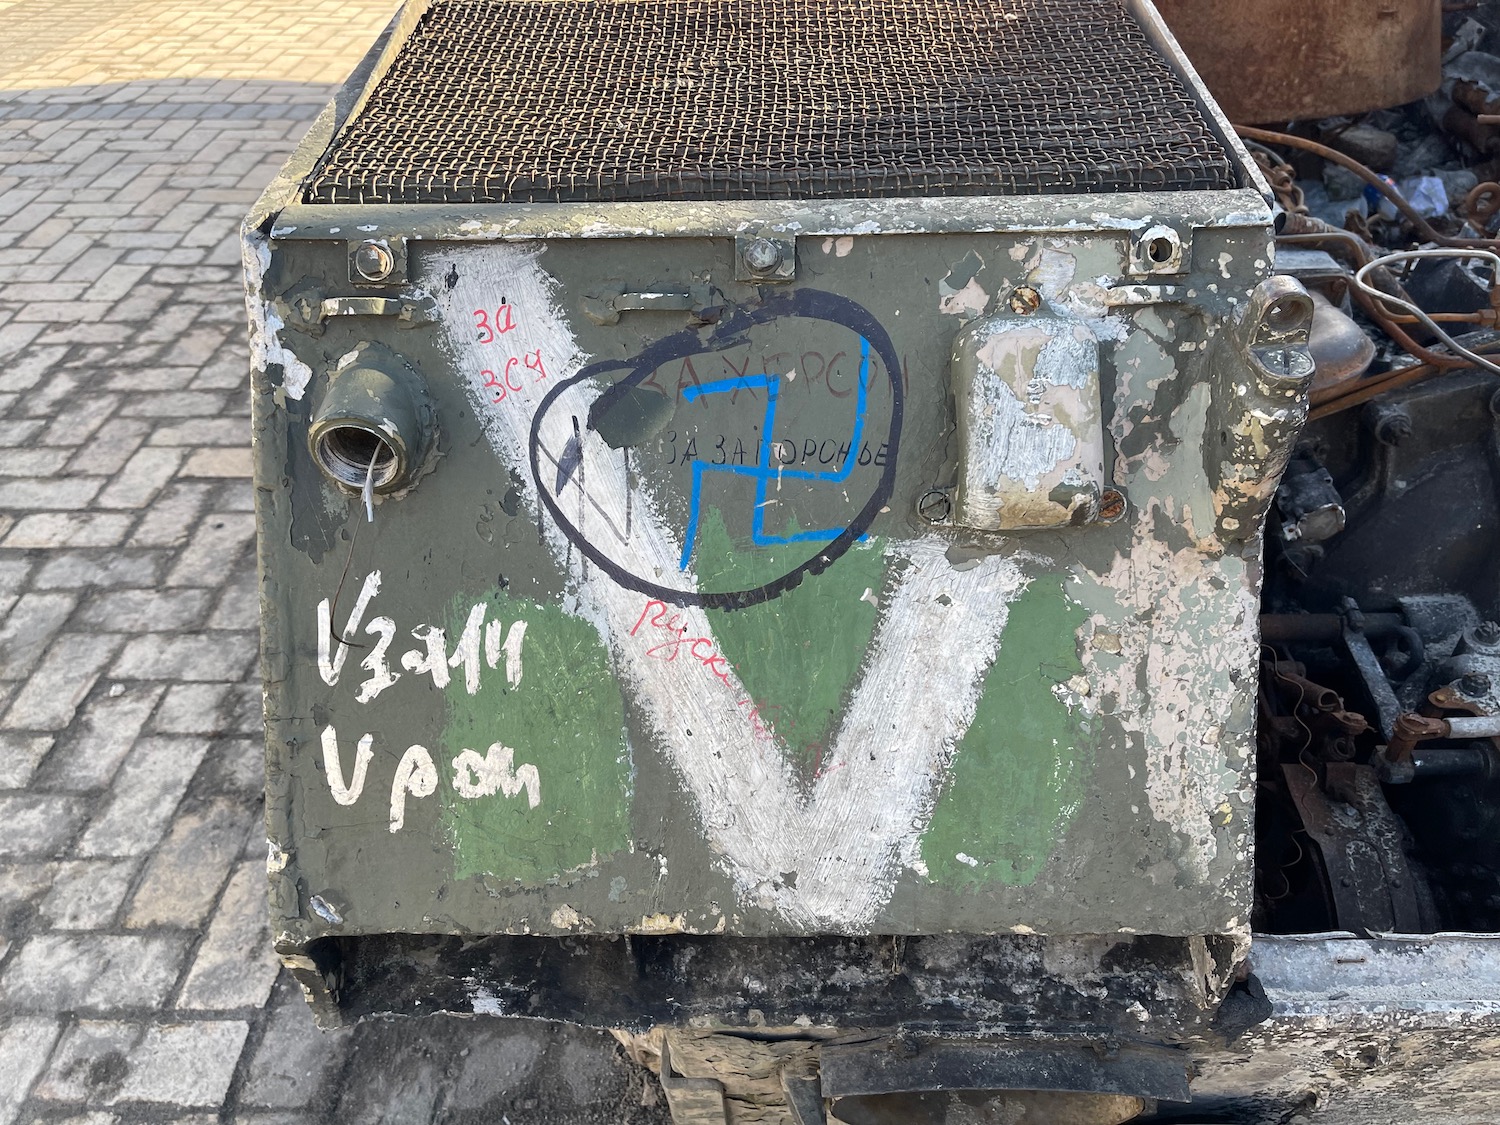 a metal box with graffiti on it